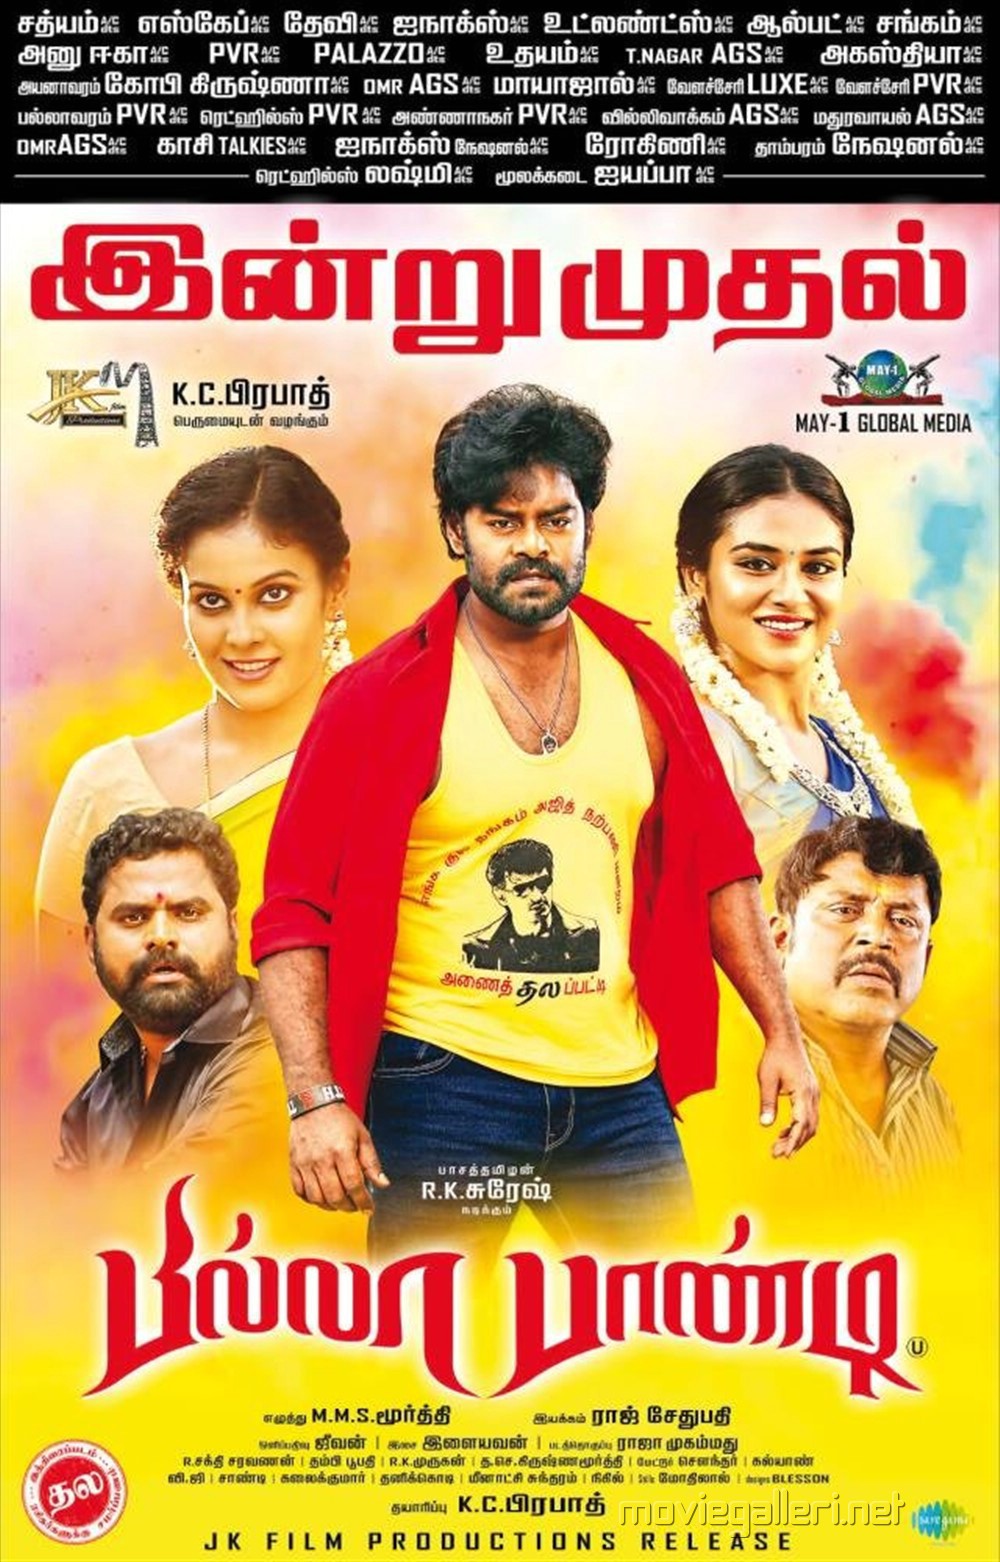 Pandi Tamil Movie Download - brownthai